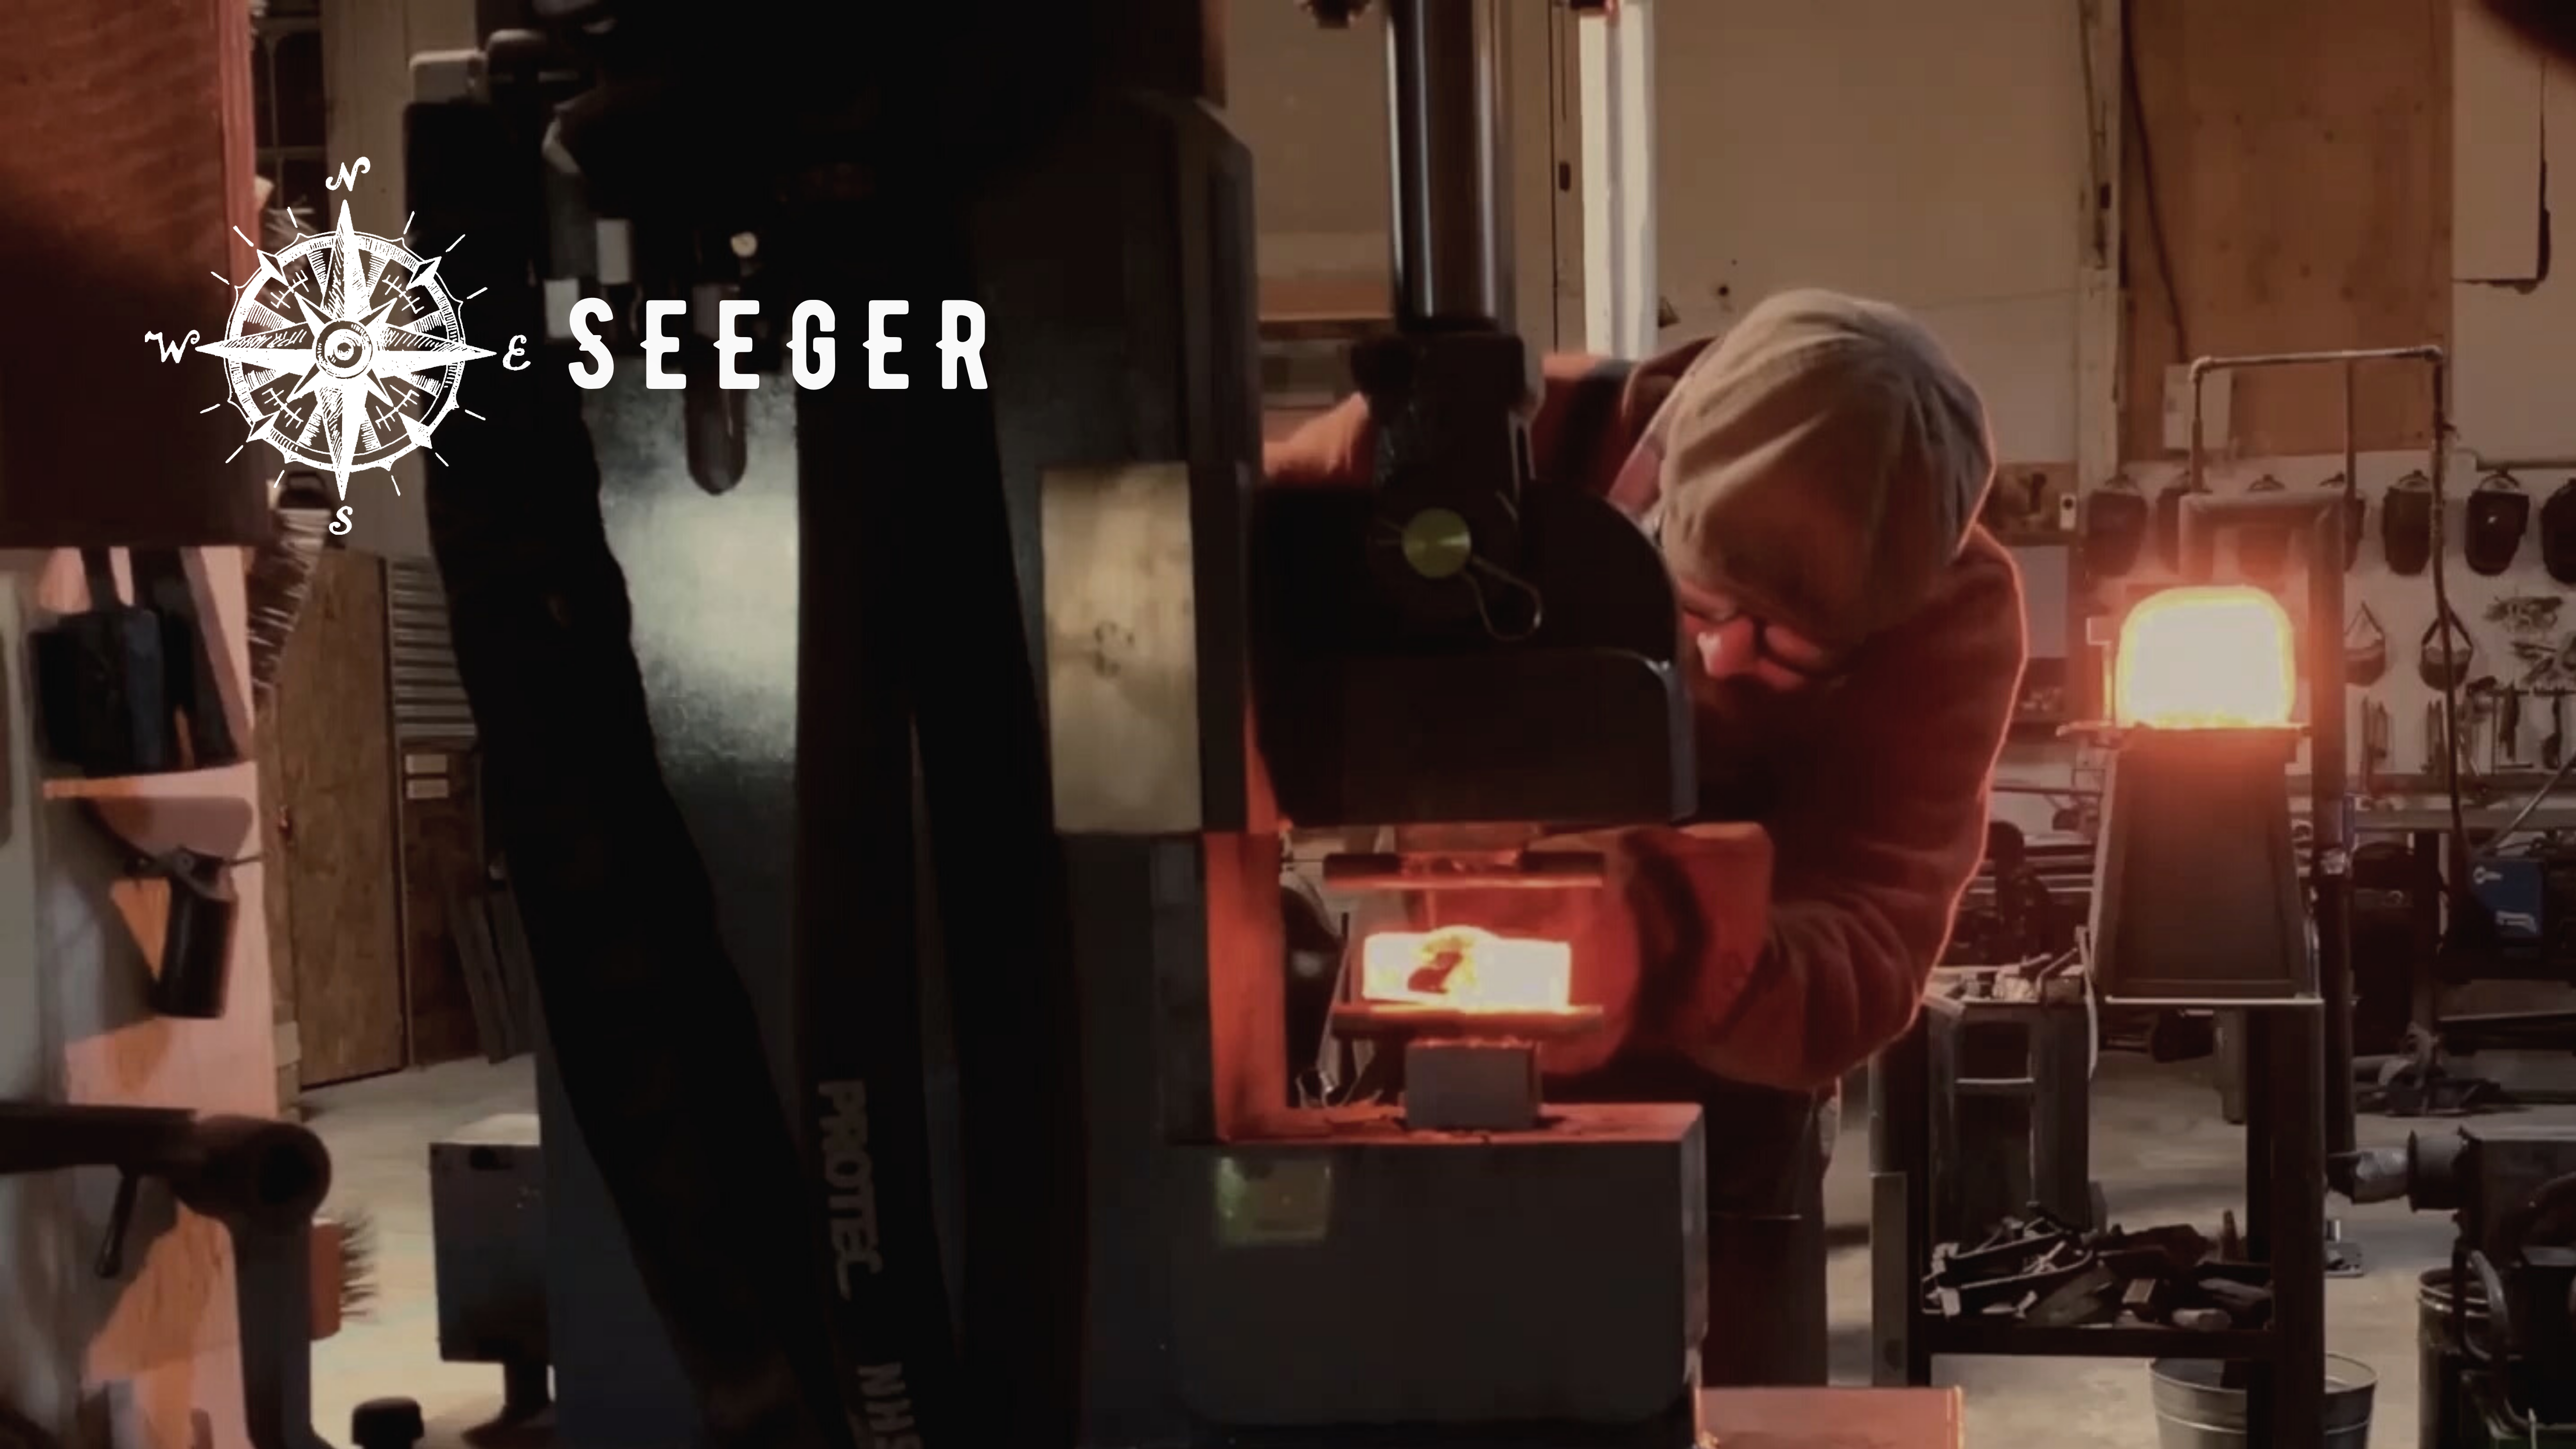 Yori Seeger using the hydraulic press to make a hammer